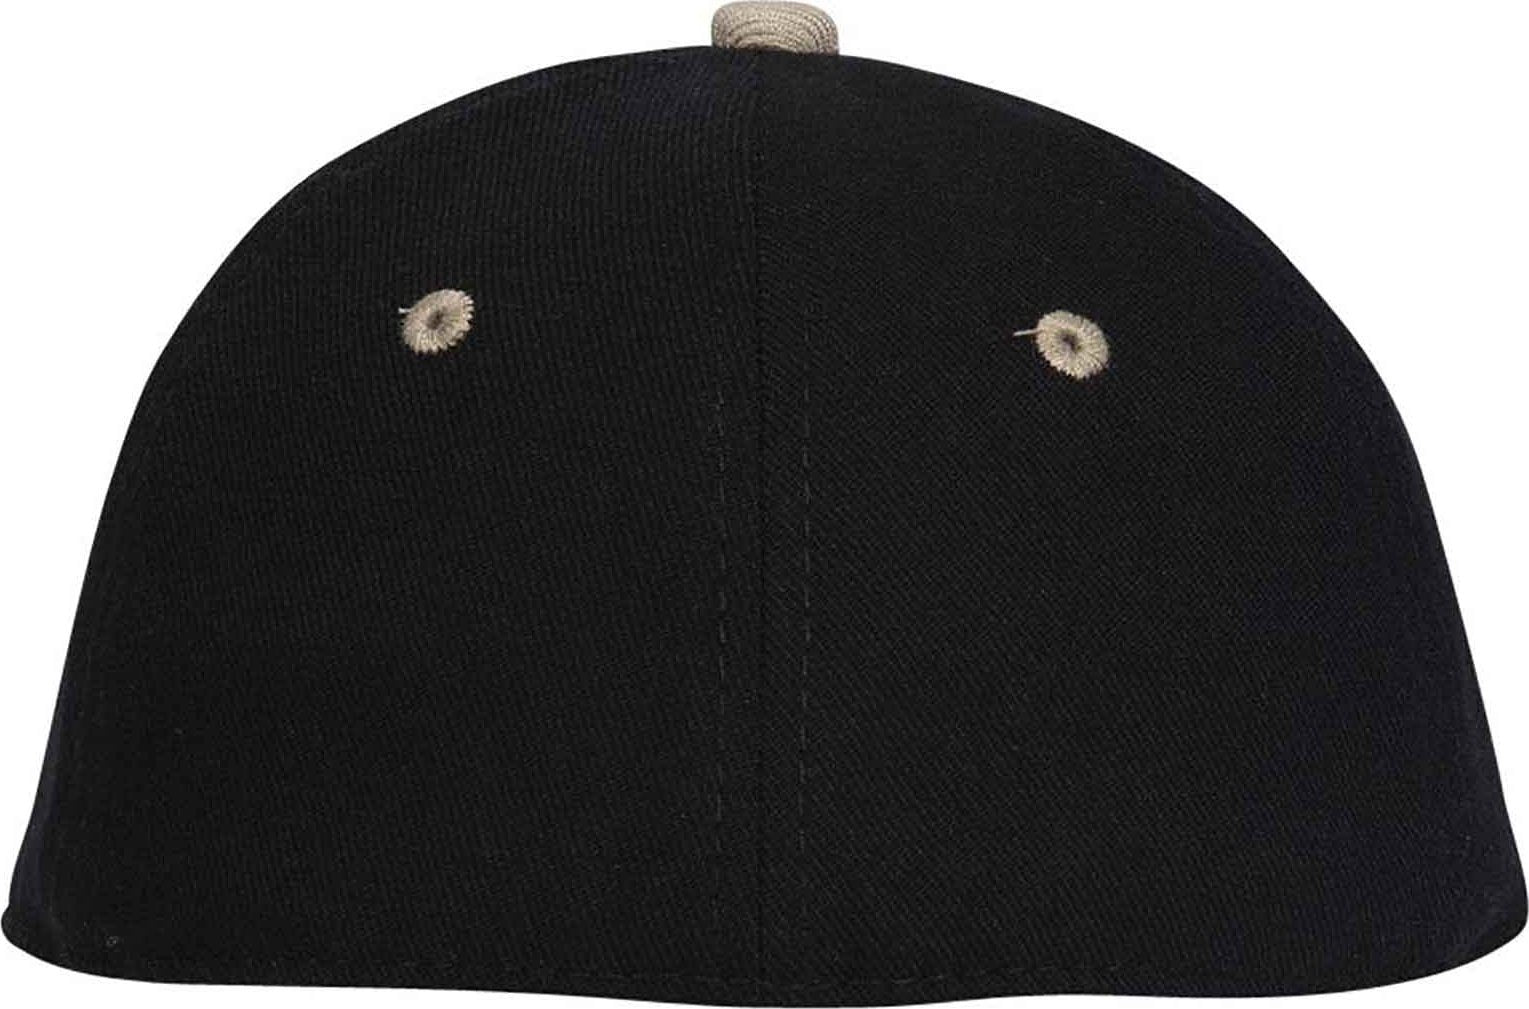 OTTO 11-194 Stretchable Wool Blend Low Profile Pro Style Cap - Khaki Black - HIT a Double - 1